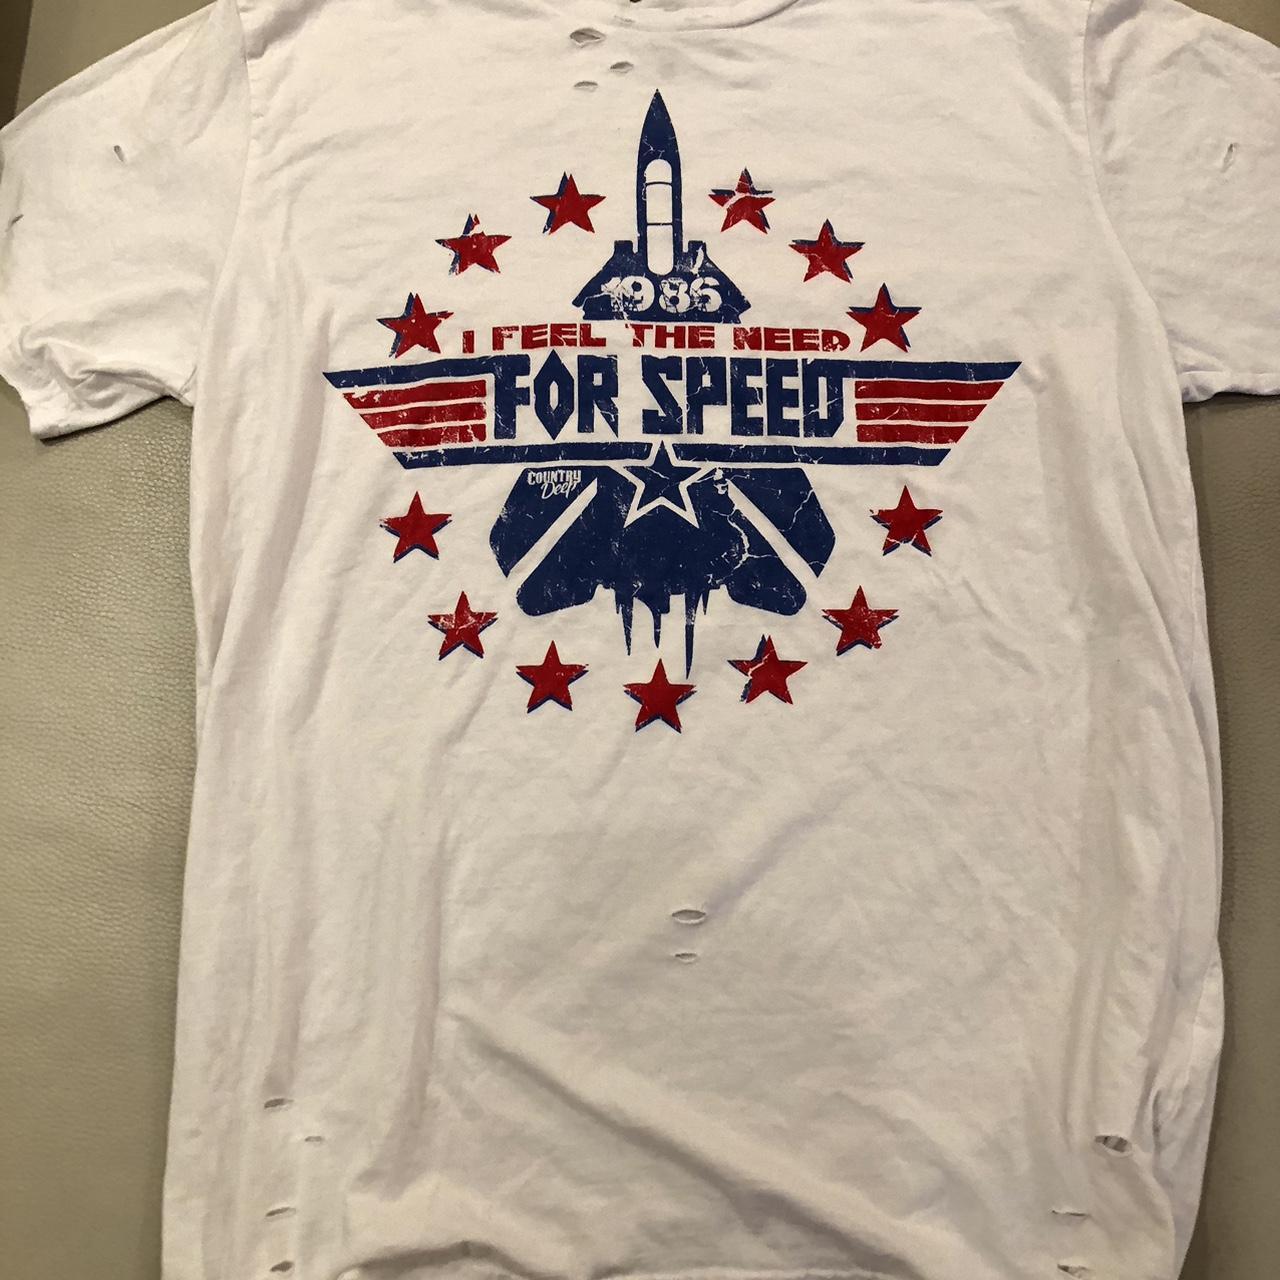 Top Gun The Need for Speed Men's T Shirt